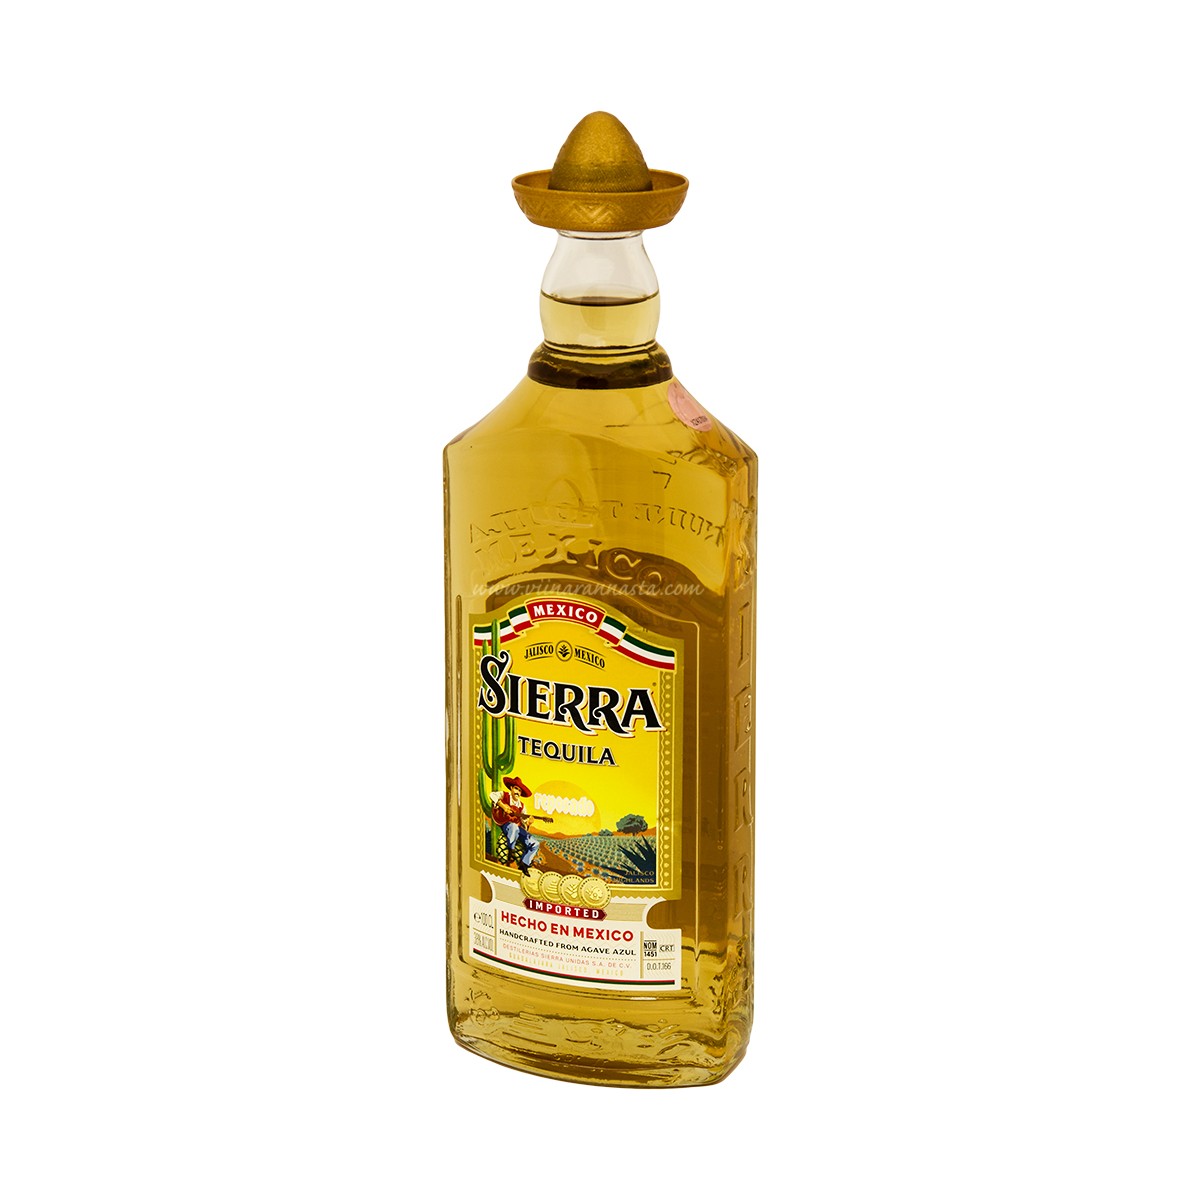 38% Sierra 100cl Tequila Reposado